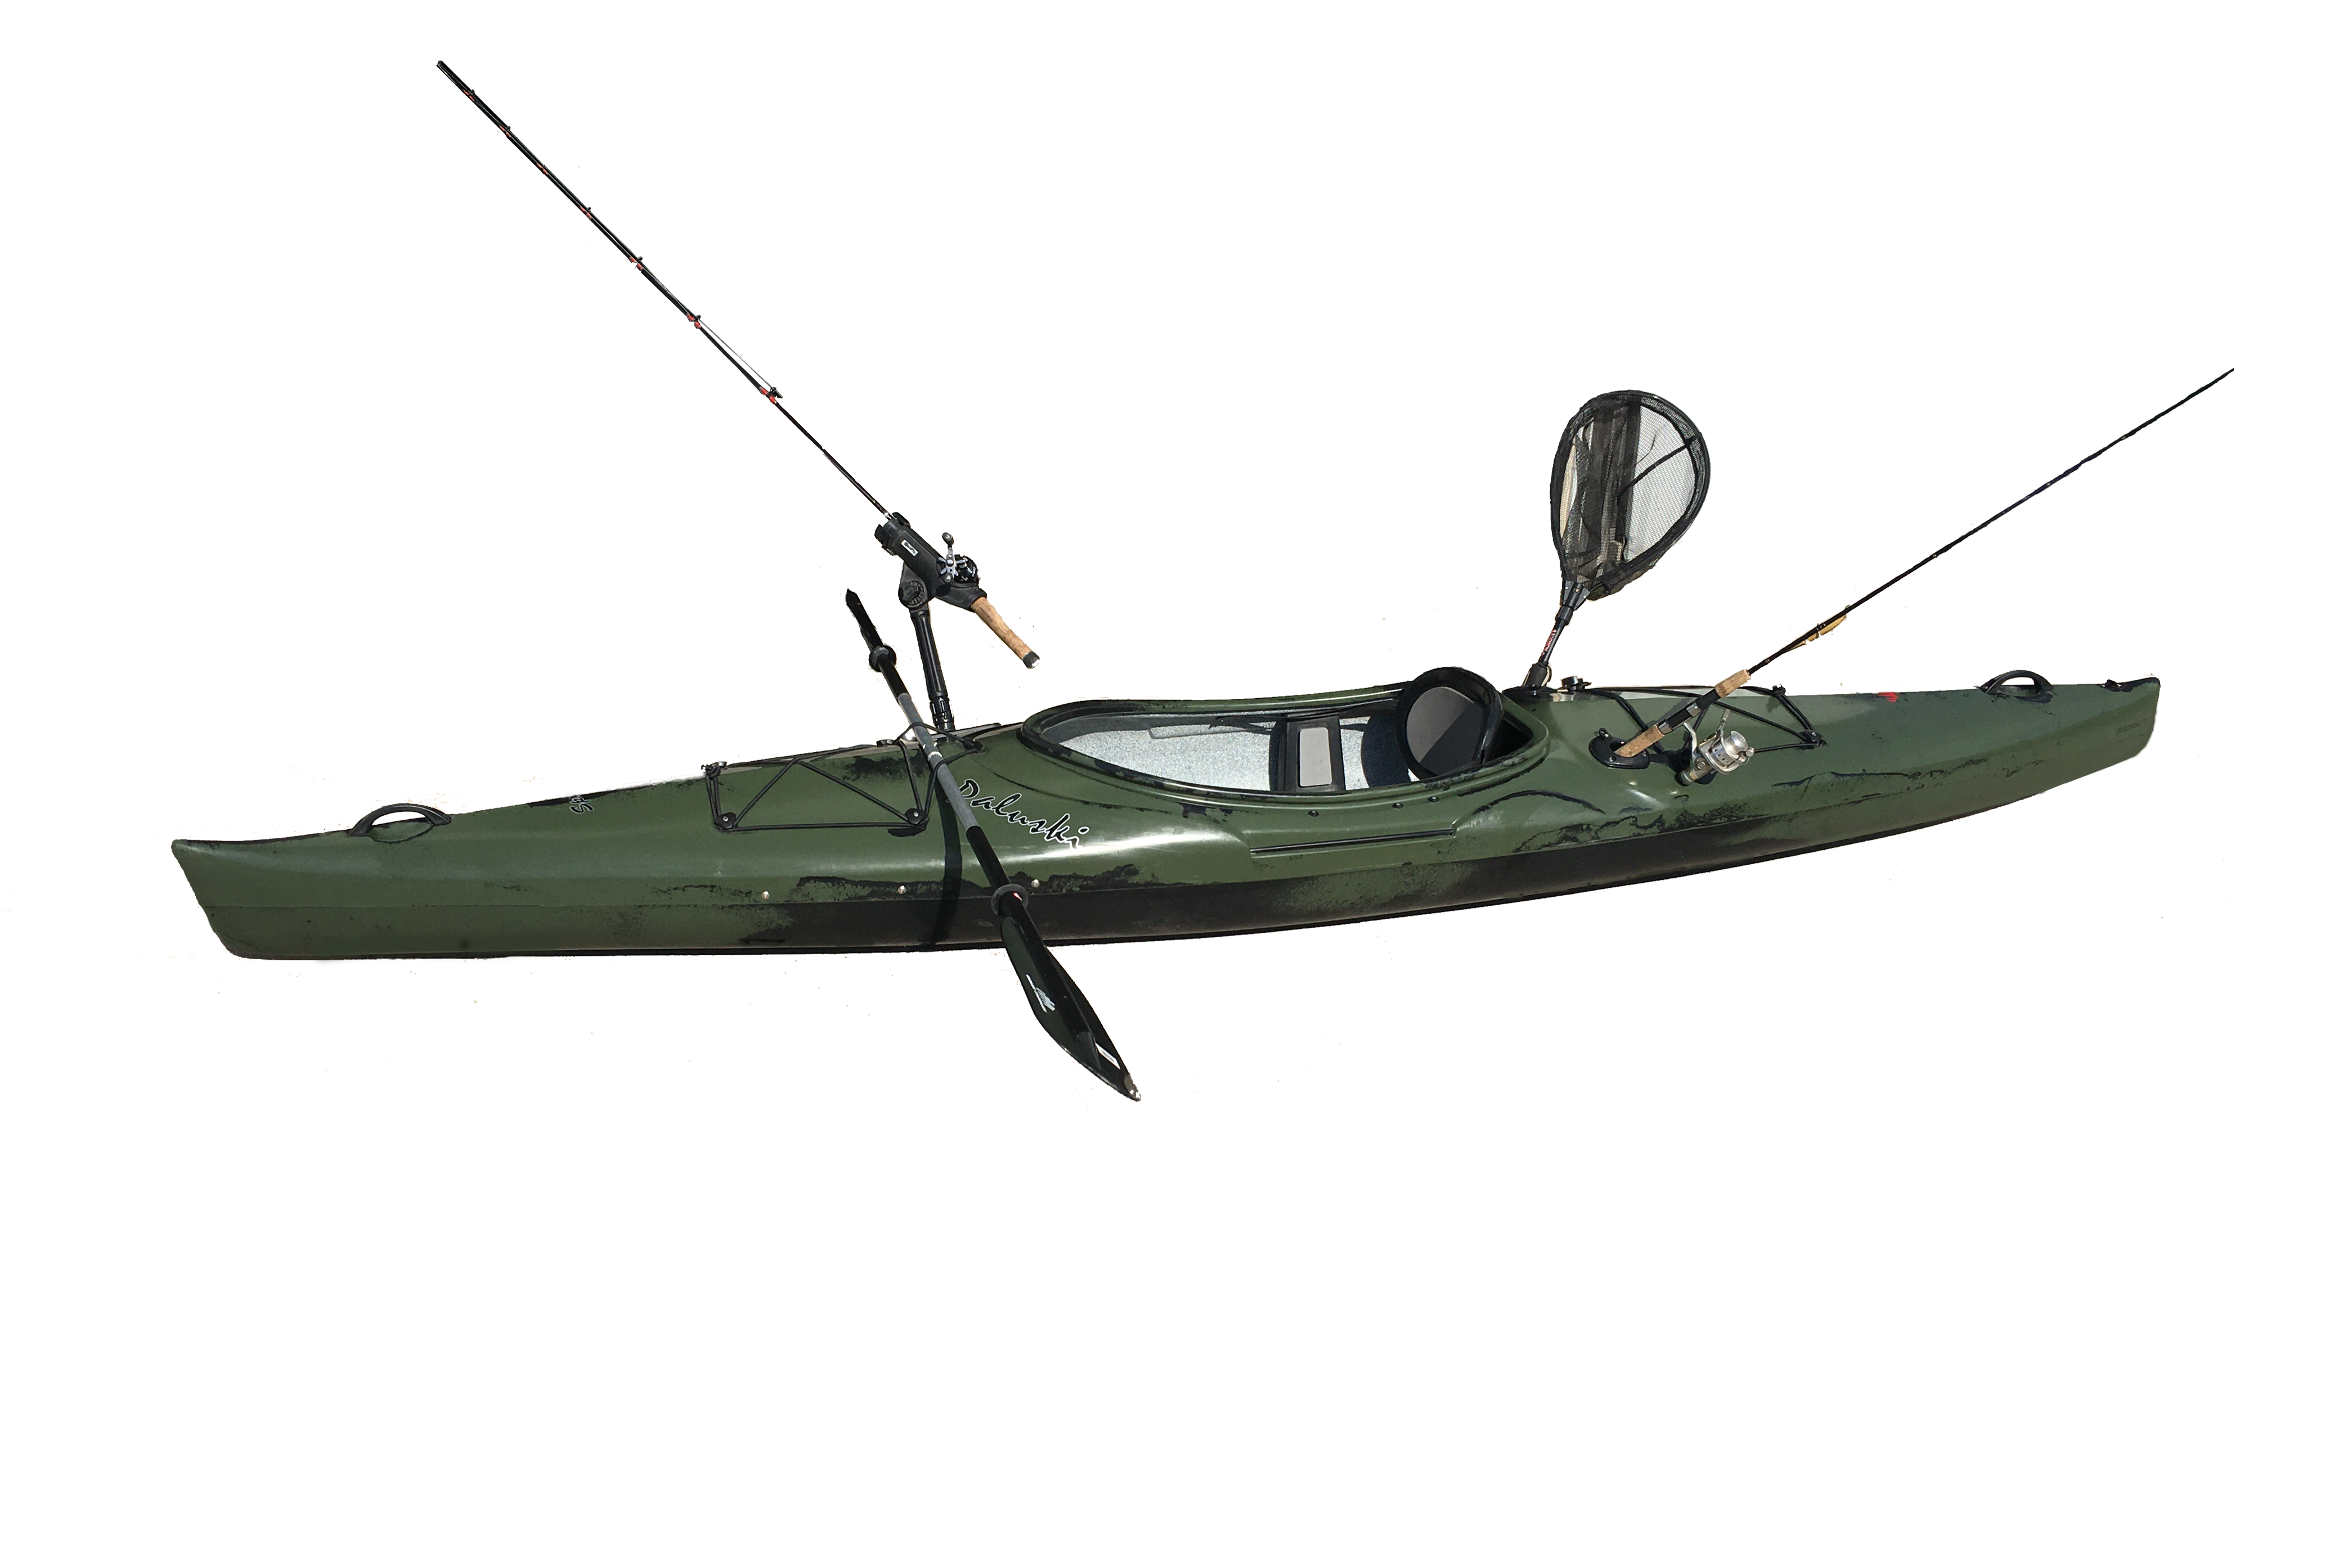 Green & black fishing kayak with fishing gear